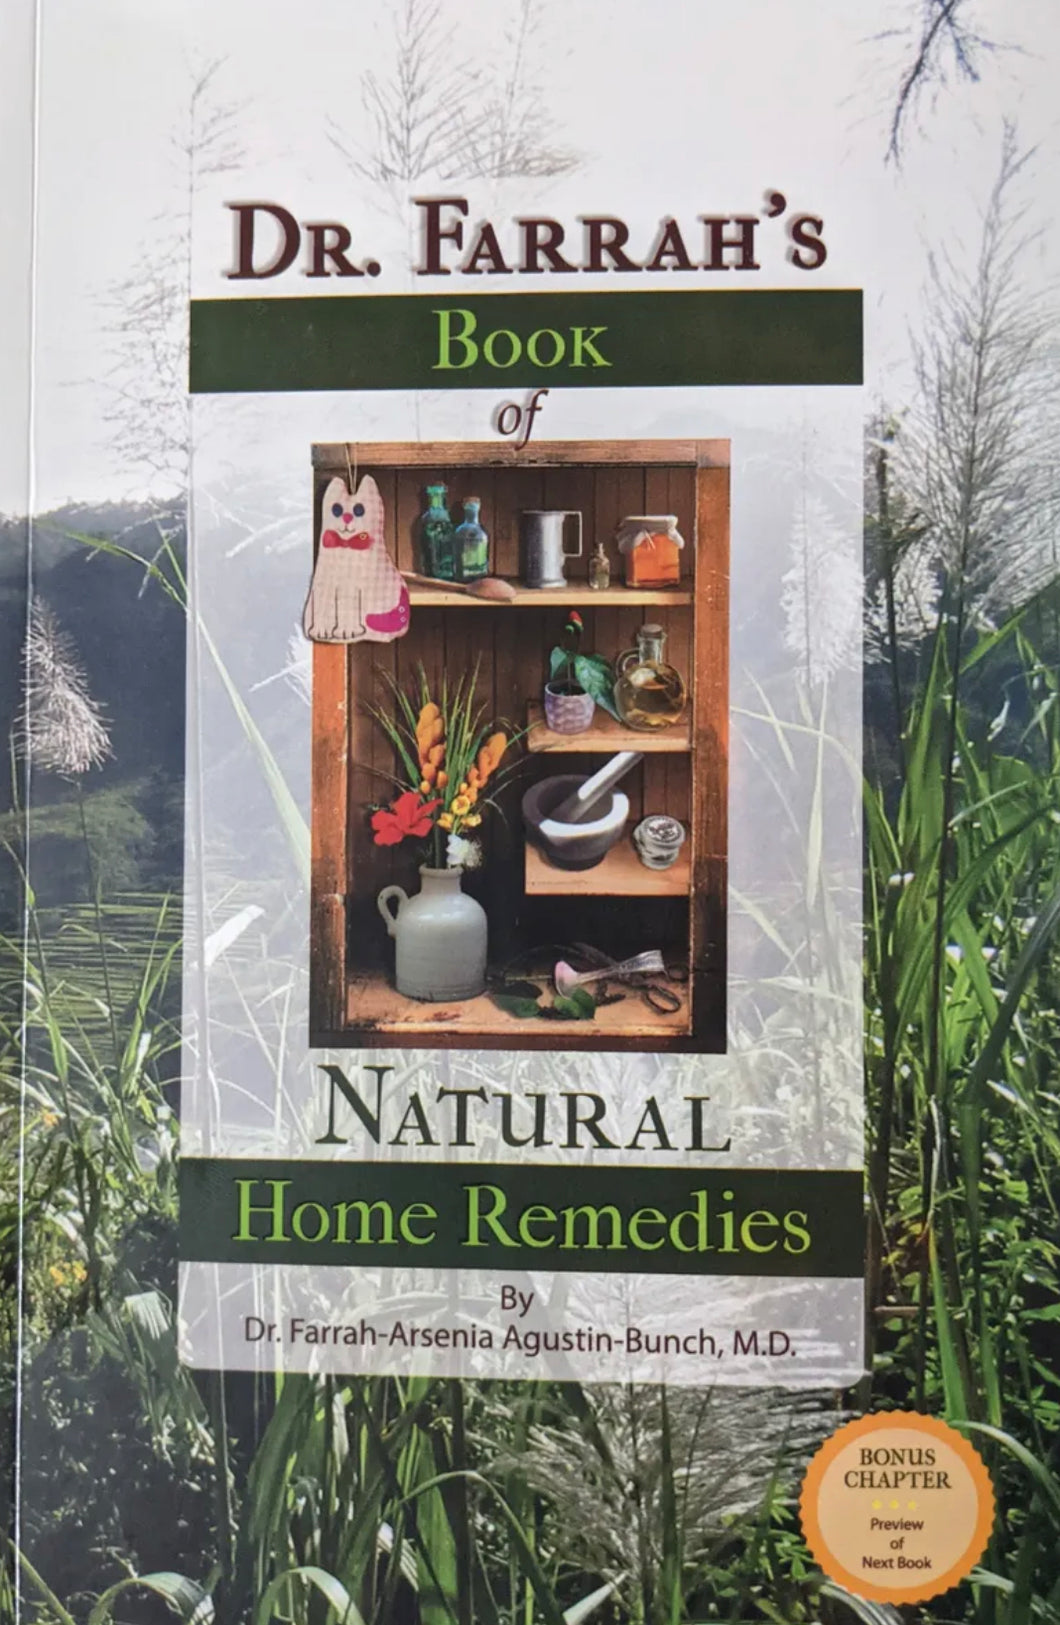 DR. FARRAH'S BOOK OF NATURAL HOME REMEDIES